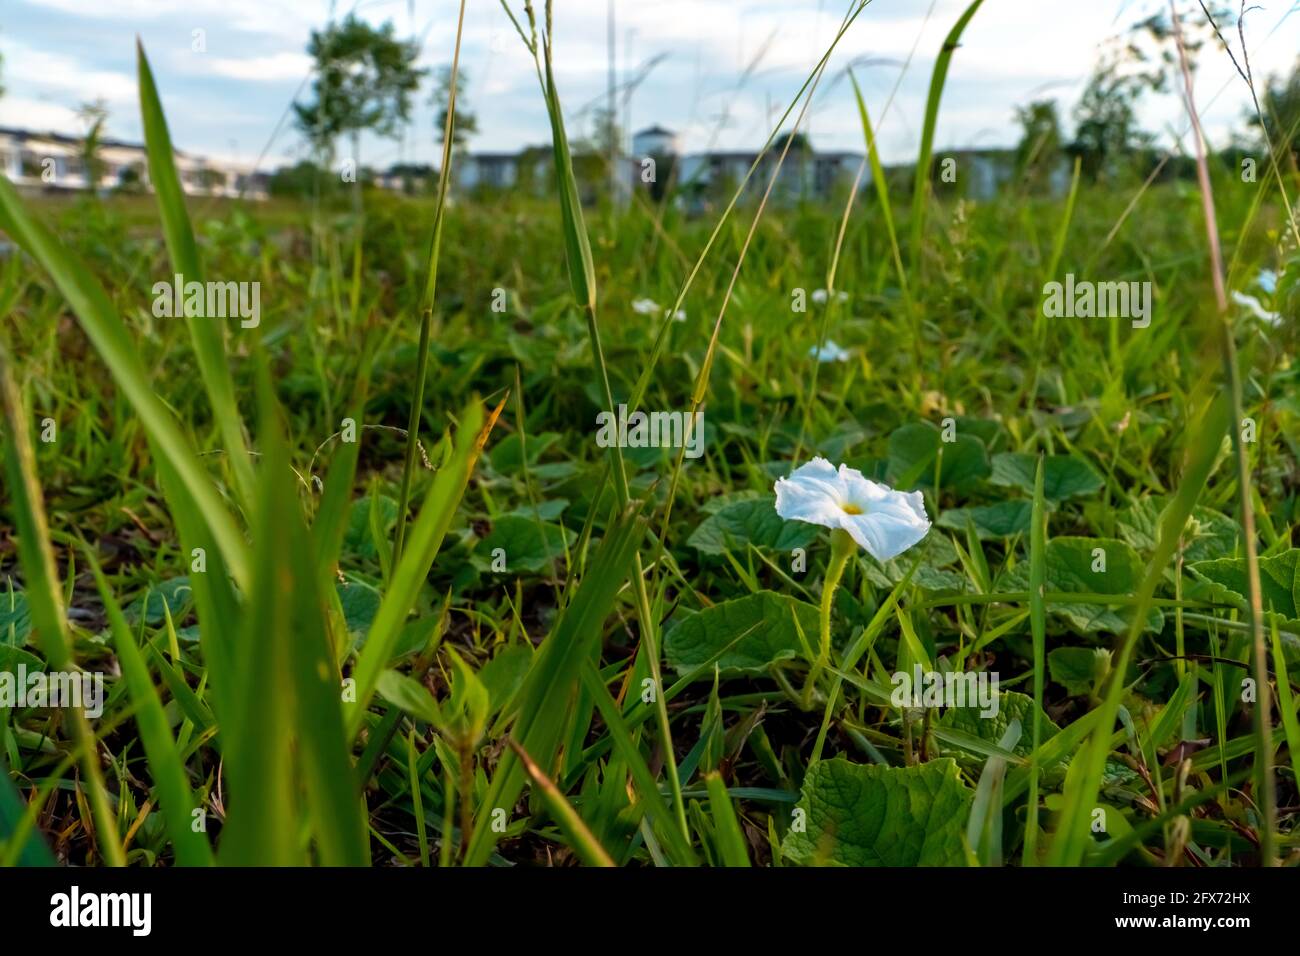 White flower in grass field Stock Photo